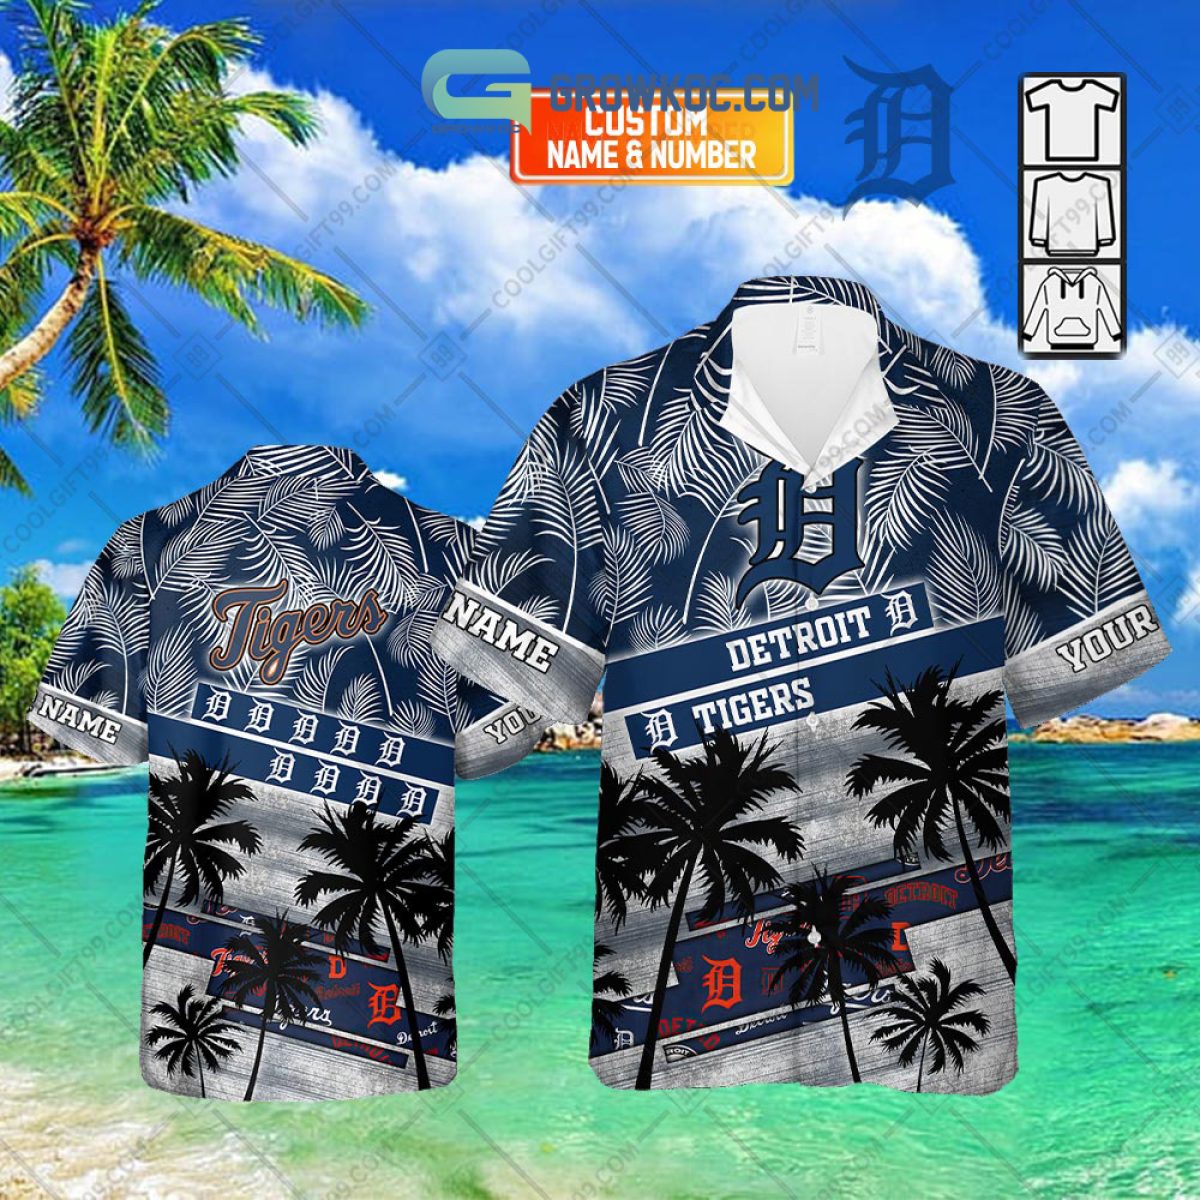 Colorado Rockies MLB Personalized Palm Tree Hawaiian Shirt - Growkoc